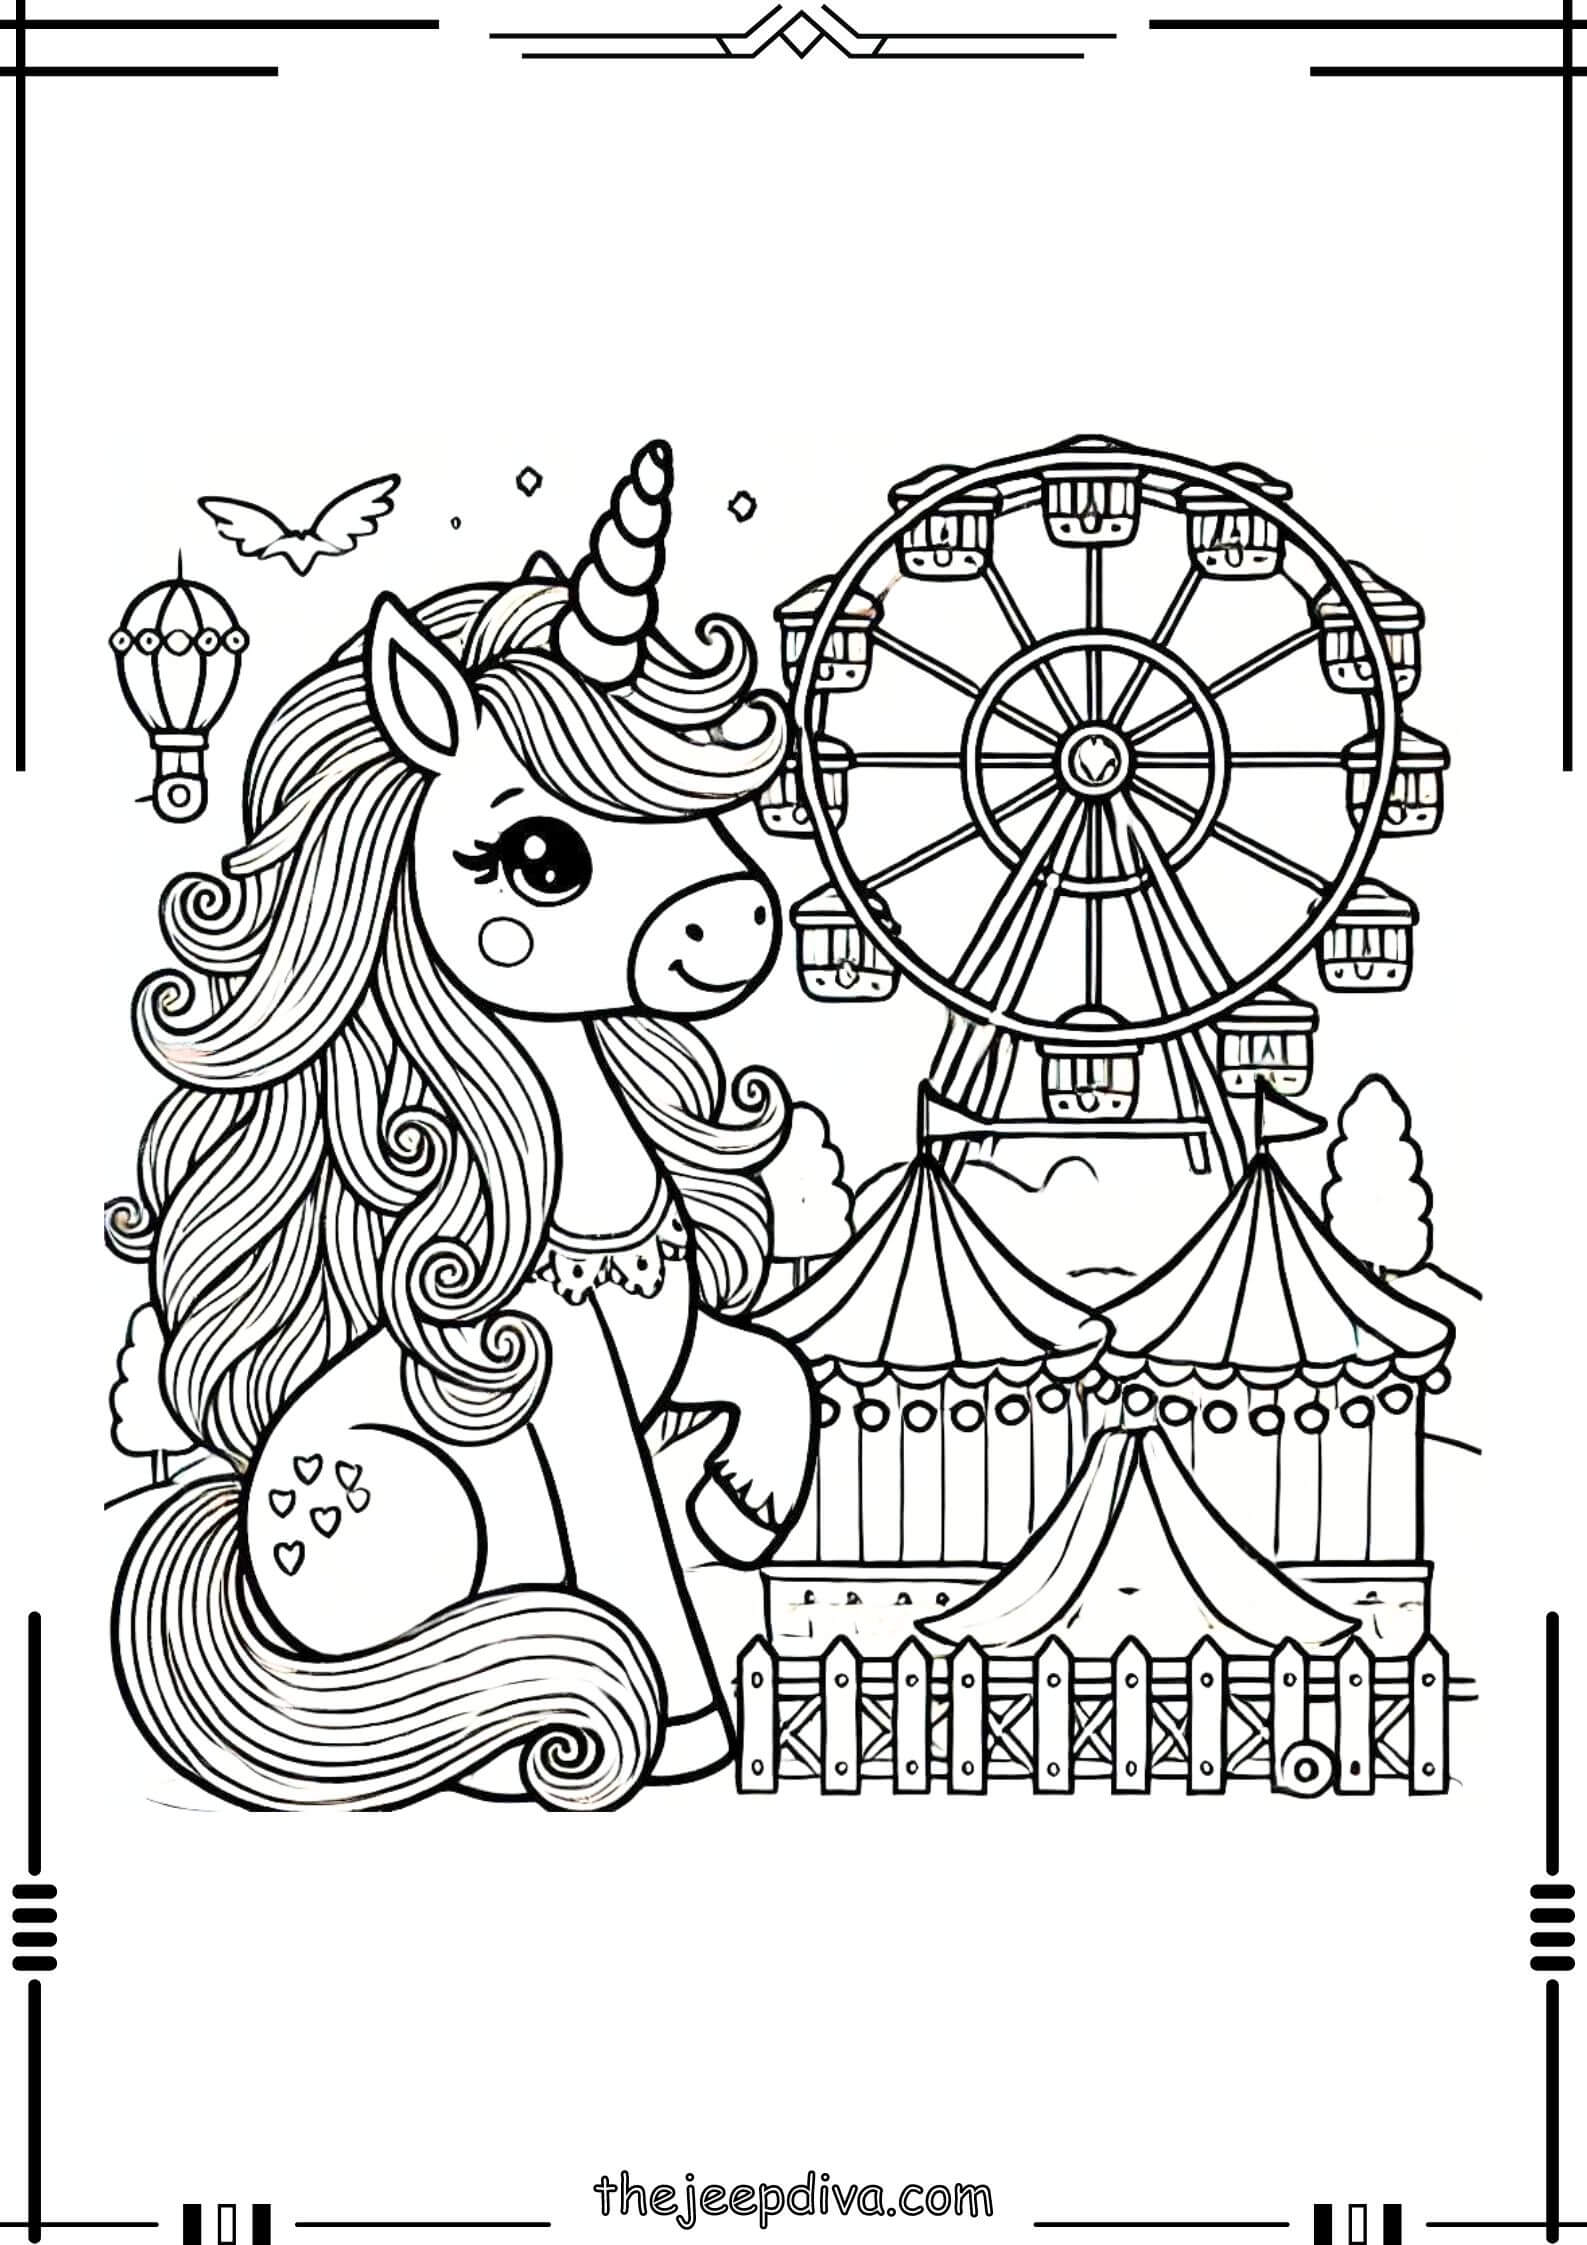 unicorn-coloring-page-hard-8